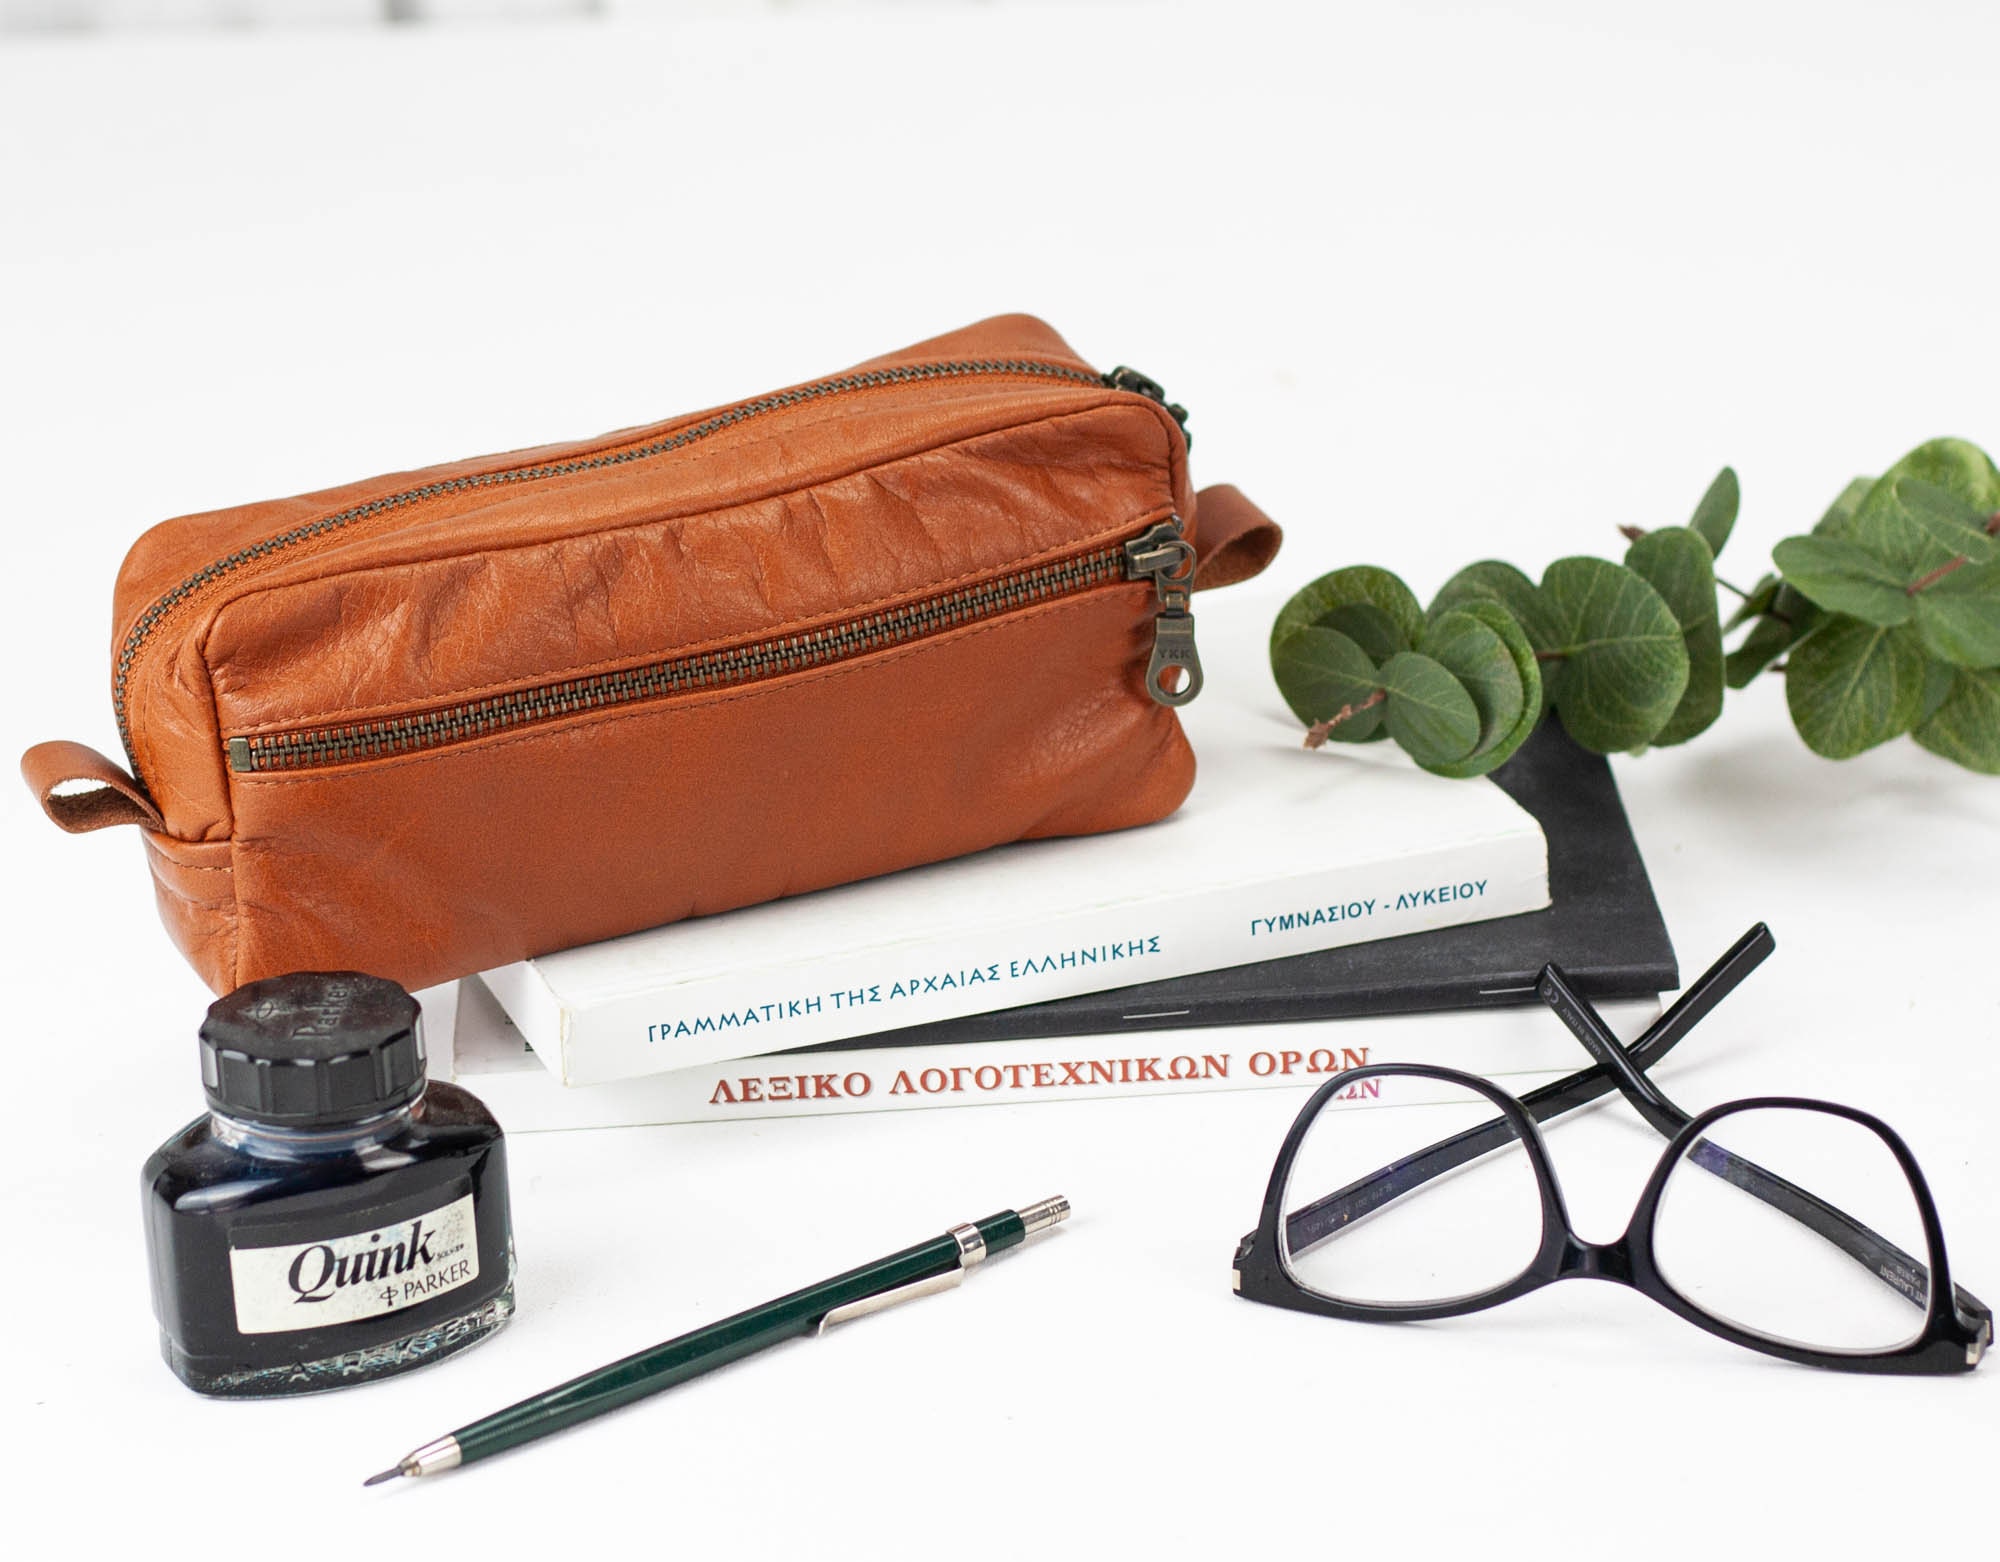 Burgundy Leather Pencils Case, Rectangular Accessory Bag Purse Case Glasses  Markers Zipper Pouch the Brick Case 